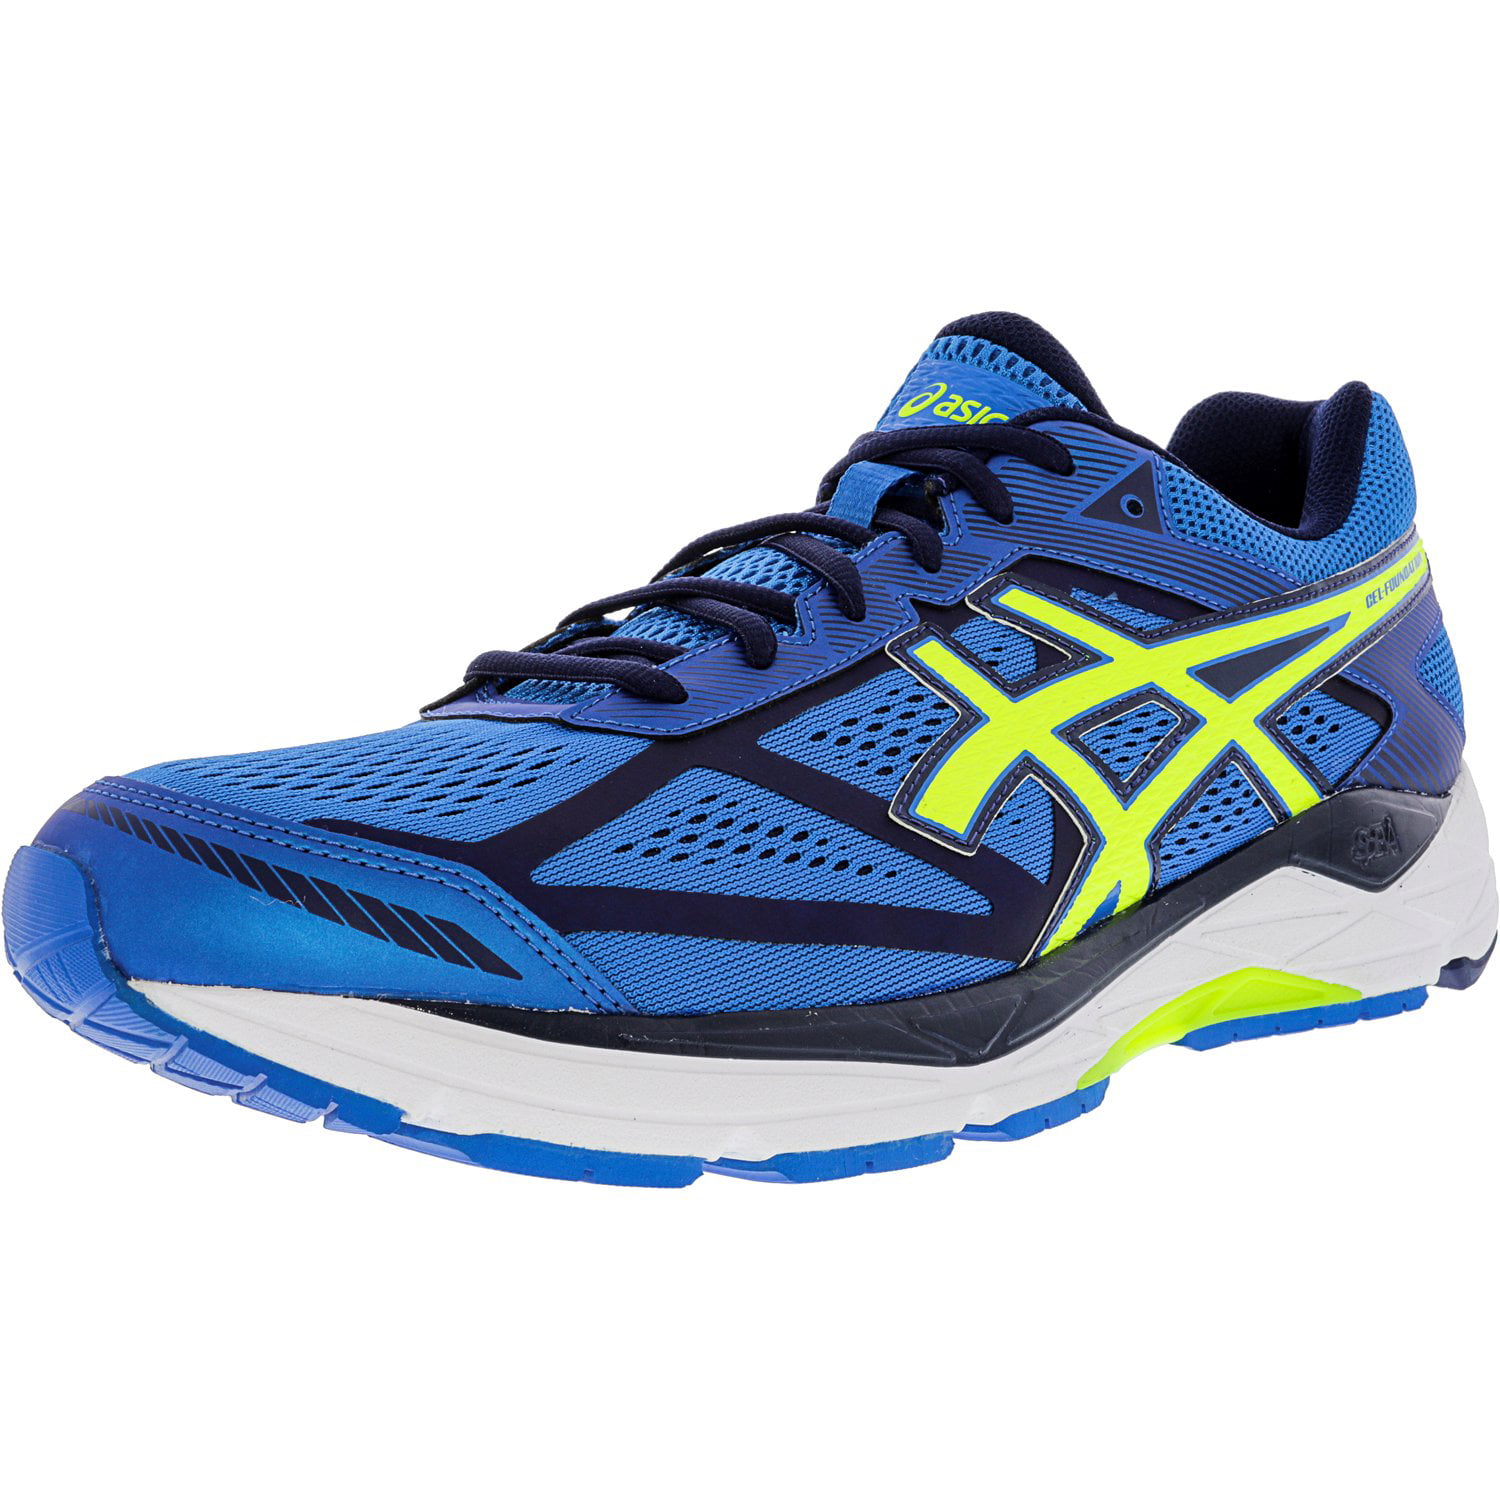 Asics Men's Gel-Foundation 12 Electric Blue / Flash Yellow Indigo  Ankle-High Running Shoe - 13M 